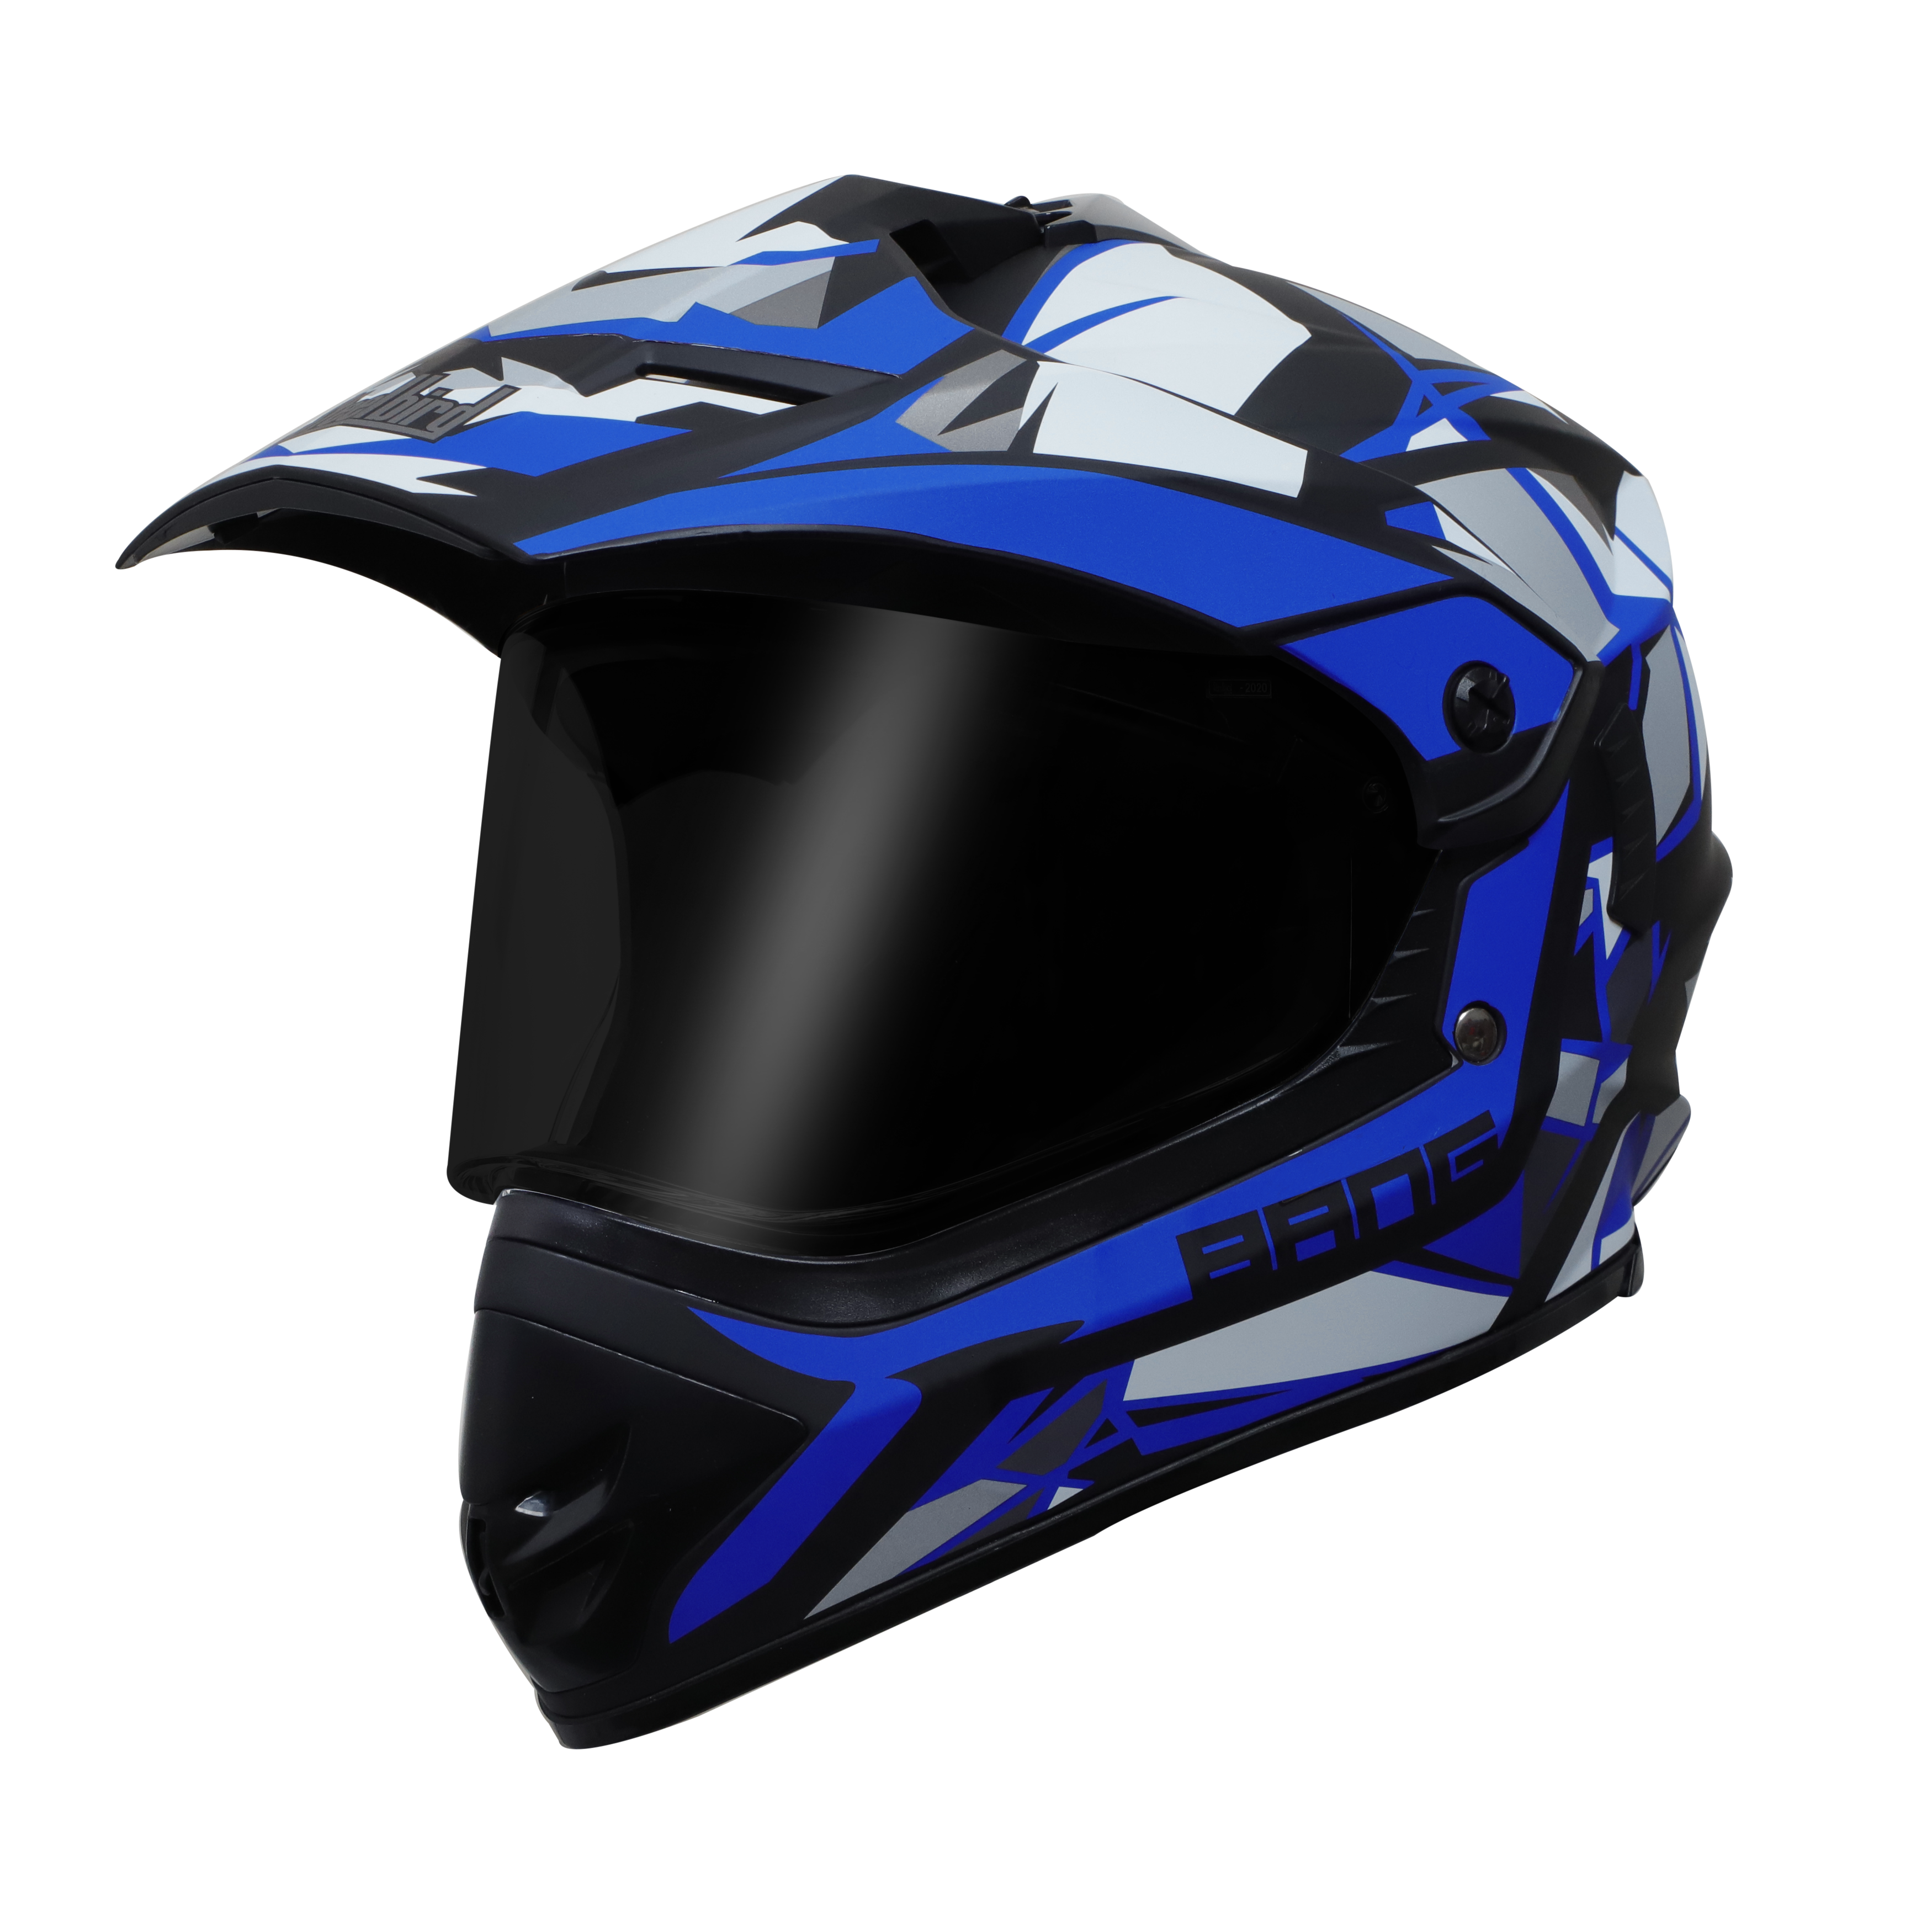 Steelbird Off Road Bang KTN ISI Certified ABS Material Shell Motocross Helmet (Matt Black Blue With Smoke Visor)